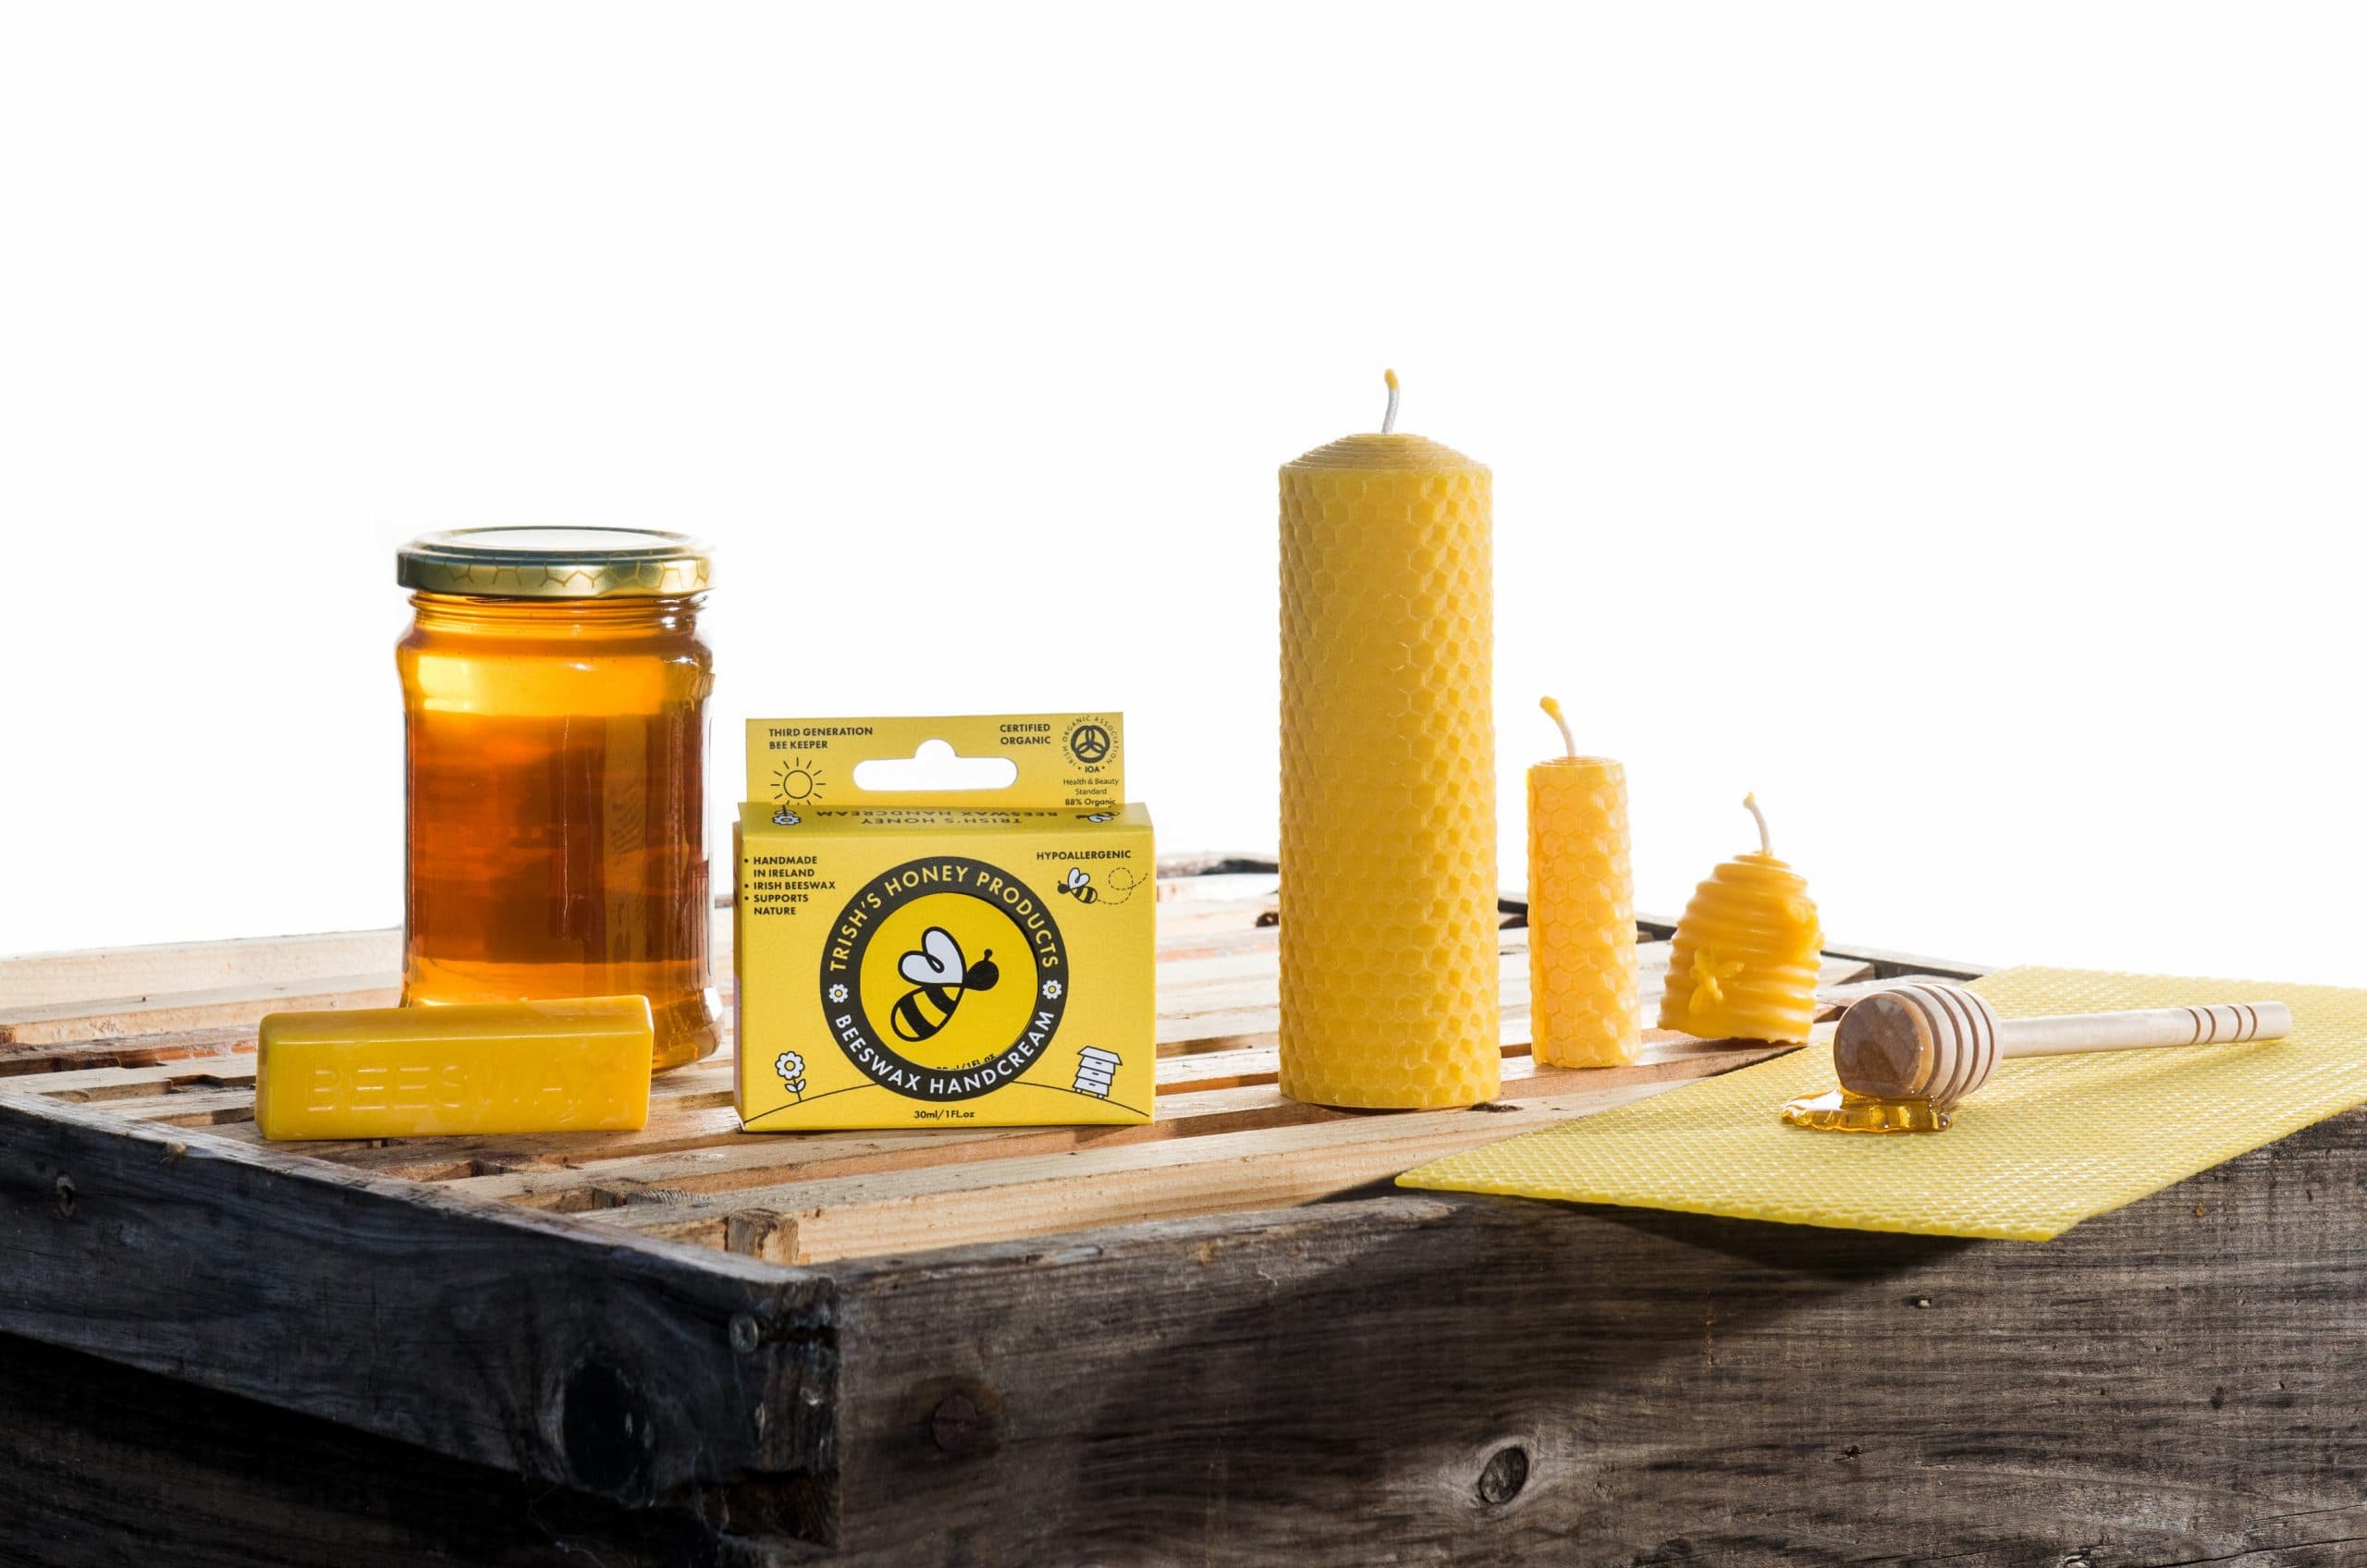 Organic-Skincare-and-Honey-Products-Handmade-in-Ireland